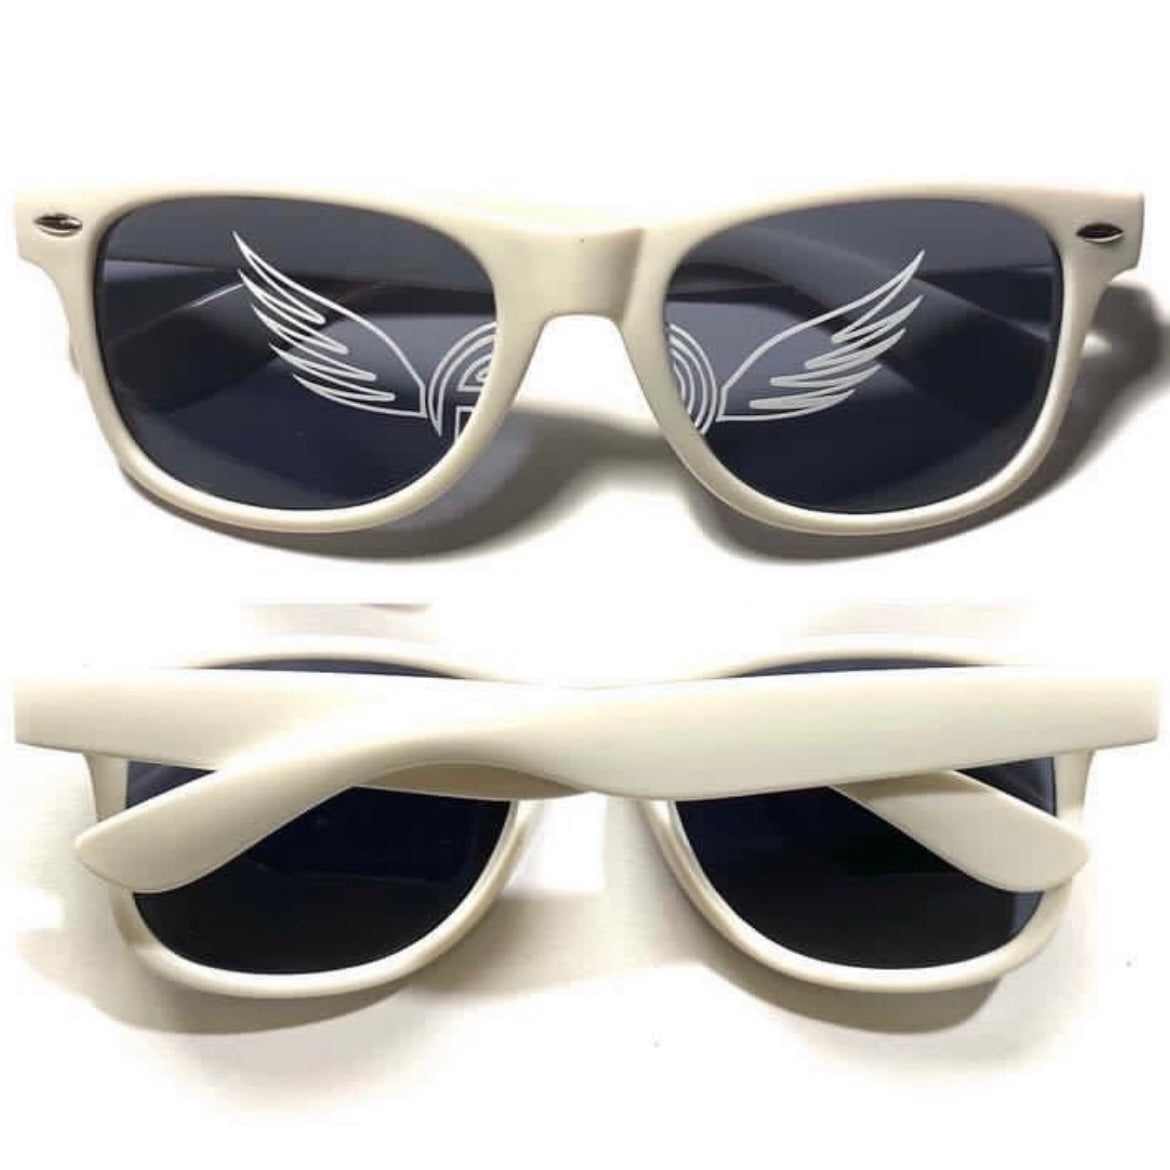 Flycamz Sunglasses